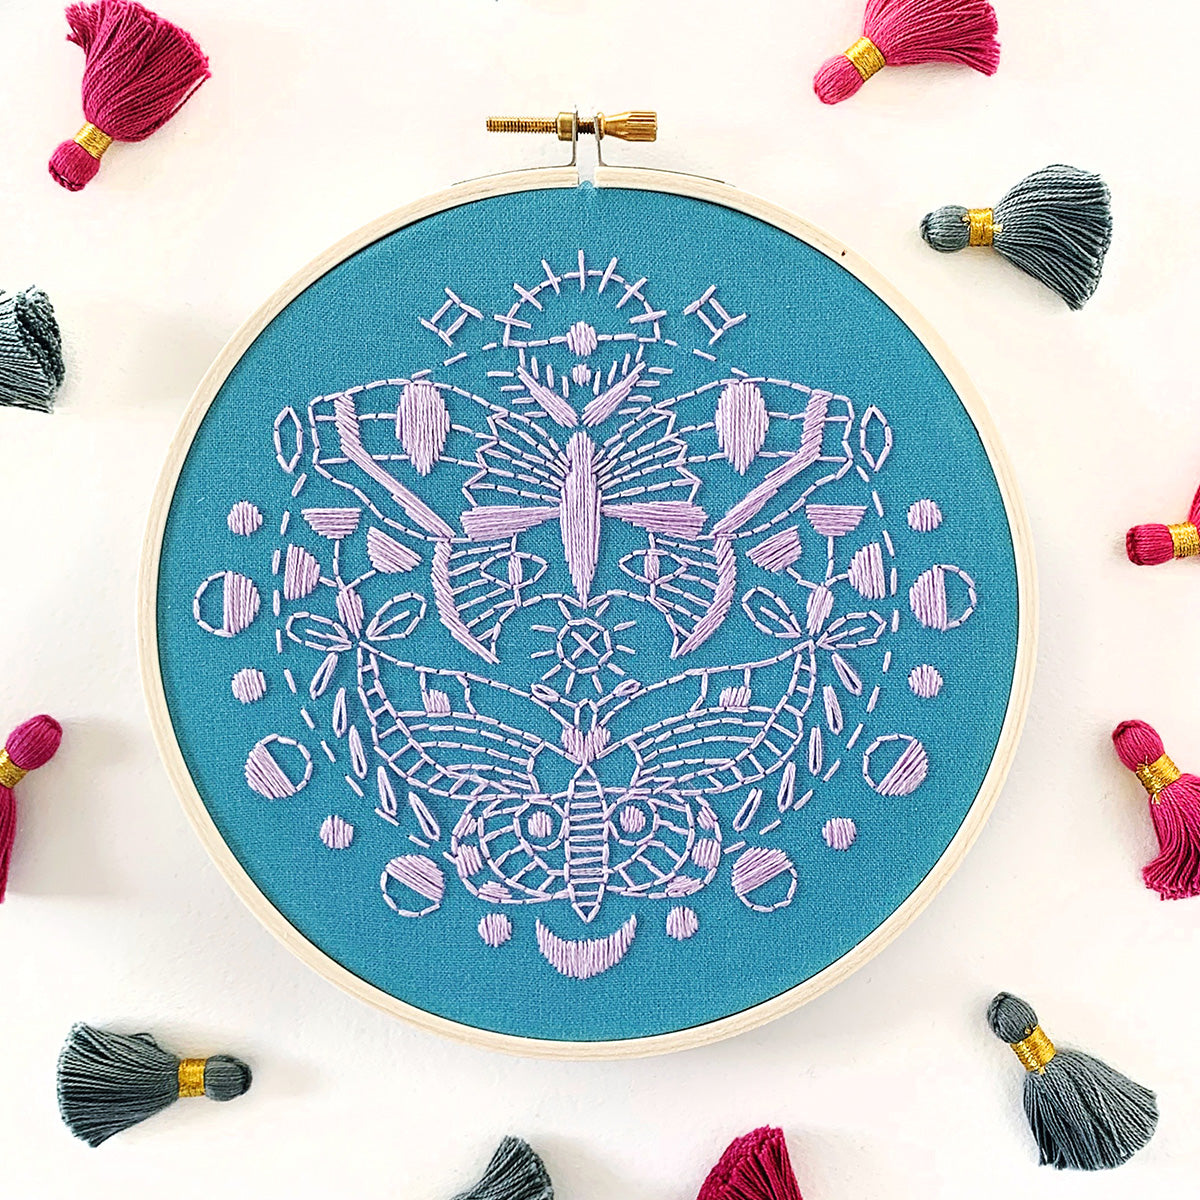 Gemini Moths Hand Embroidery Kit